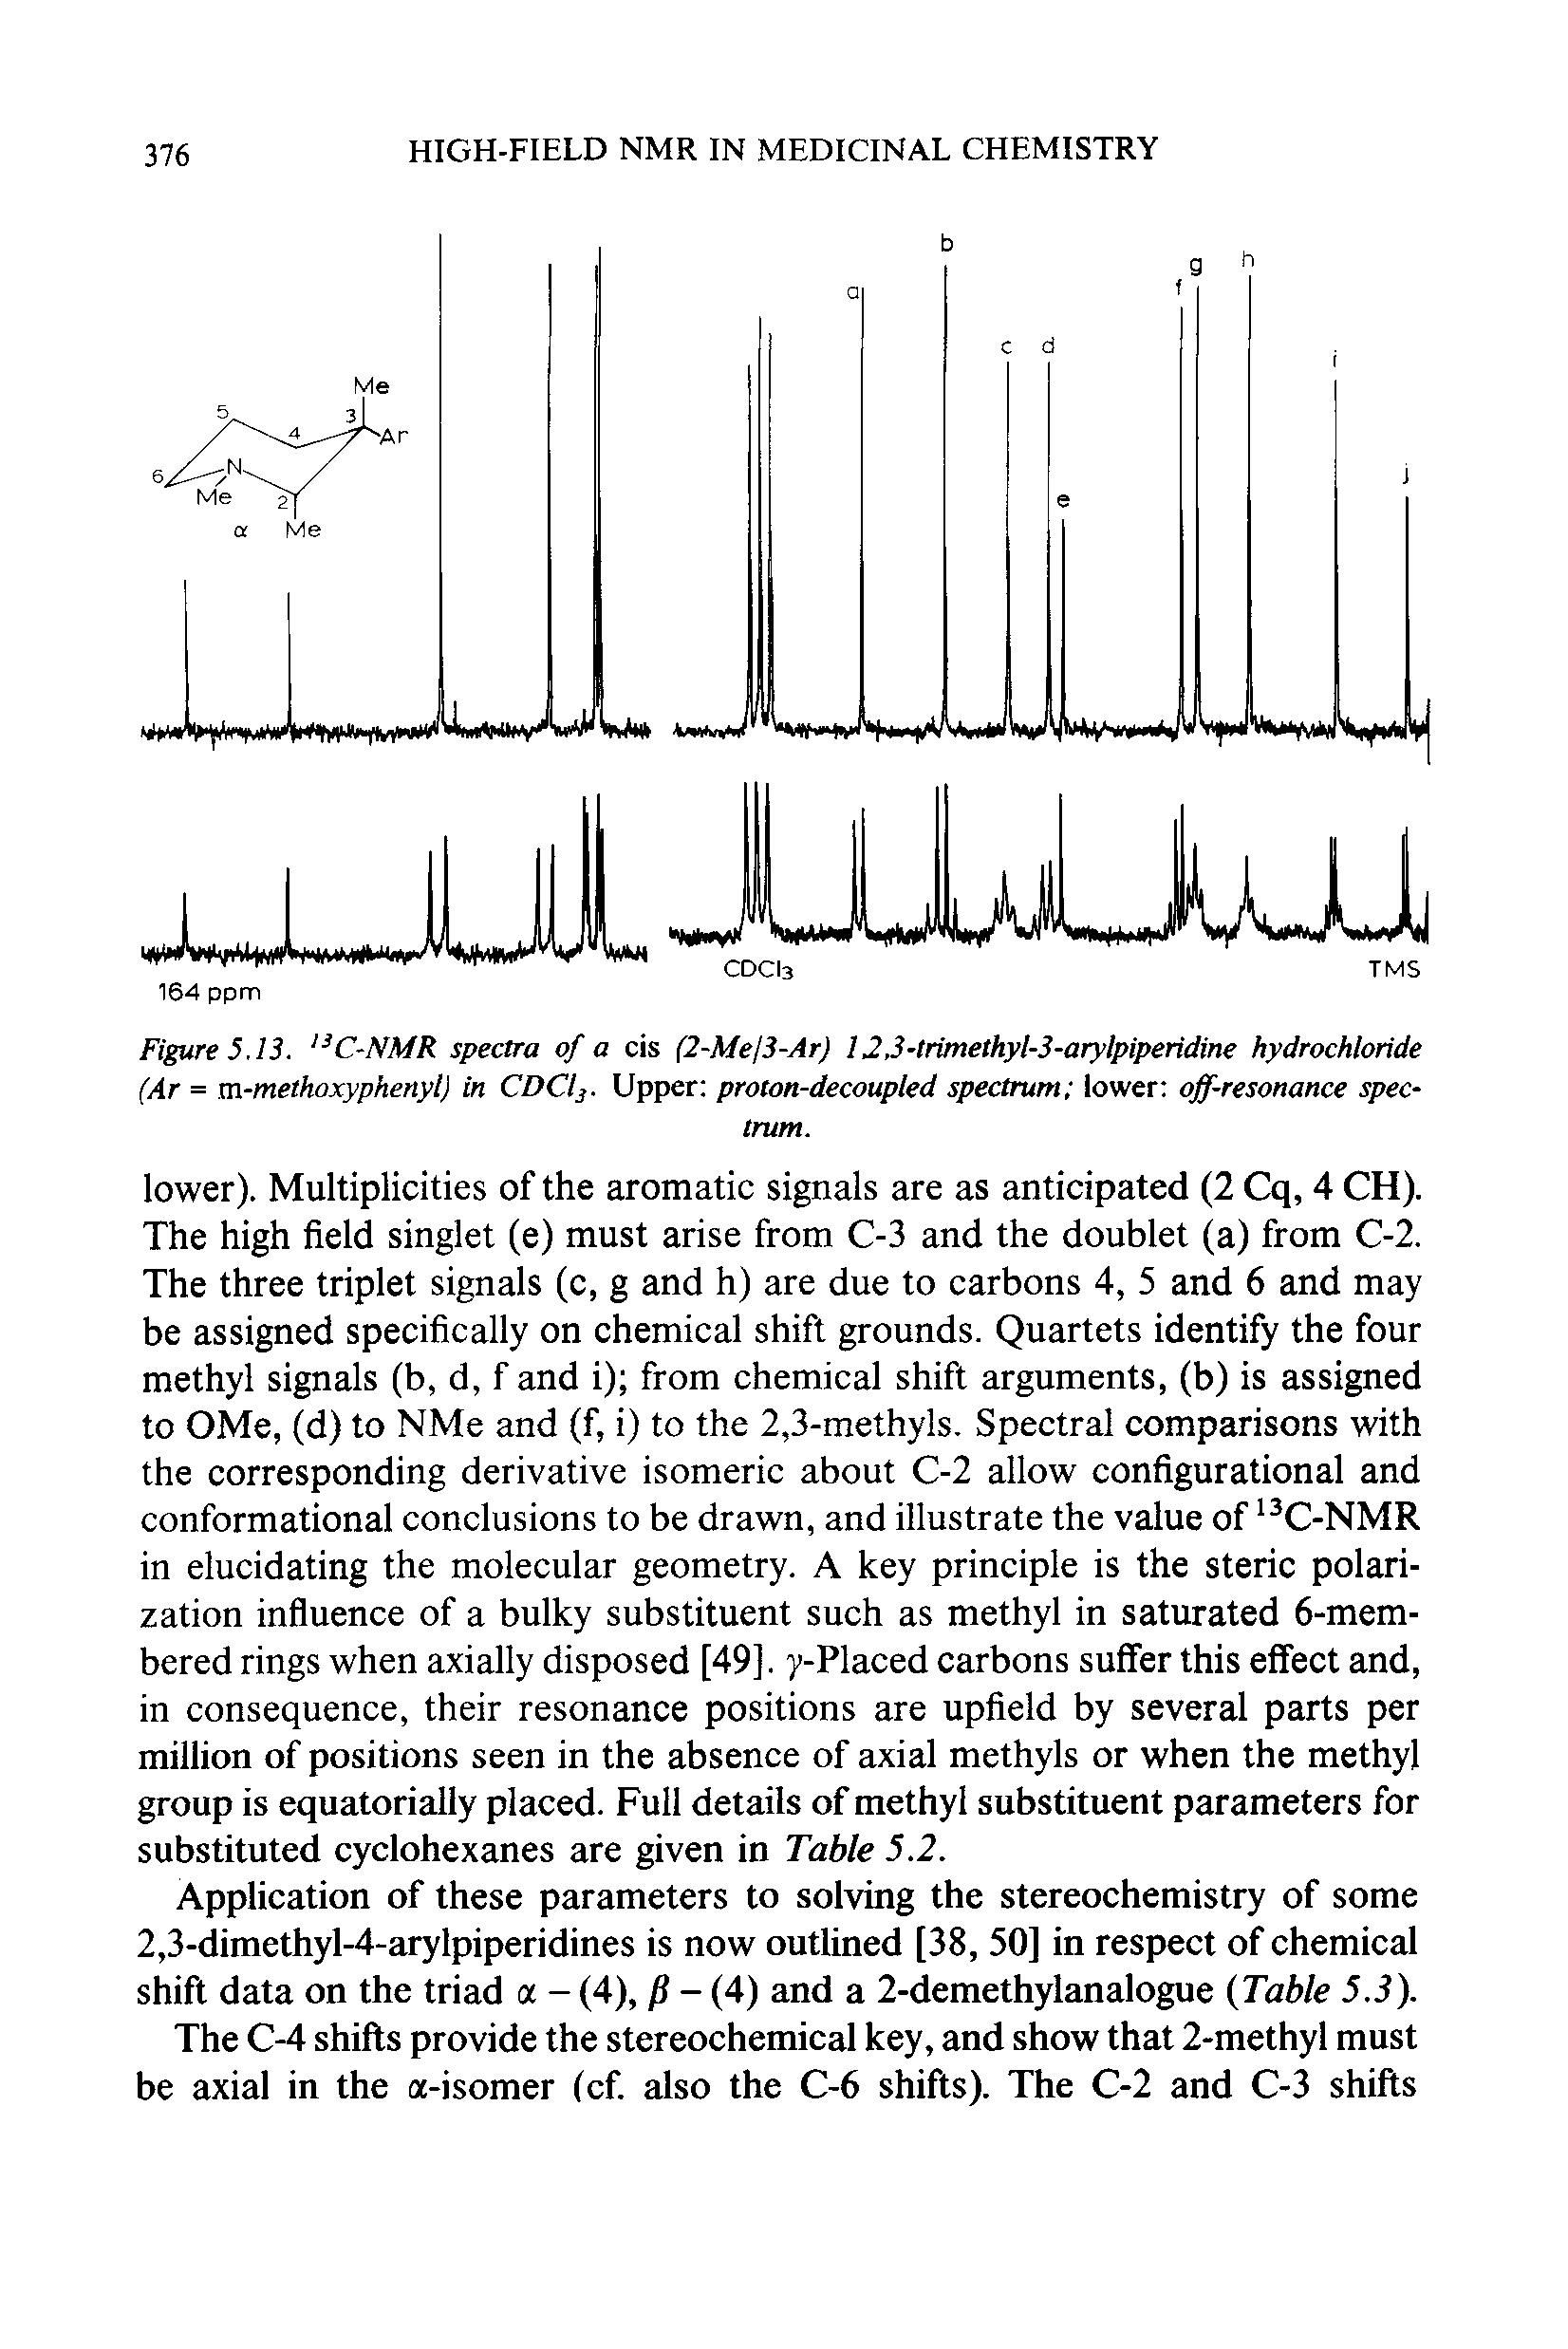 Figure 5.13. C-NMR spectra of a cis (2-Mej3-Ar) I2,3-lrimethyl-3-arylpiperidine hydrochloride (Ar = m-methoxyphenyl) in CDClj. Upper proton-decoupled spectrum lower off-resonance spectrum.